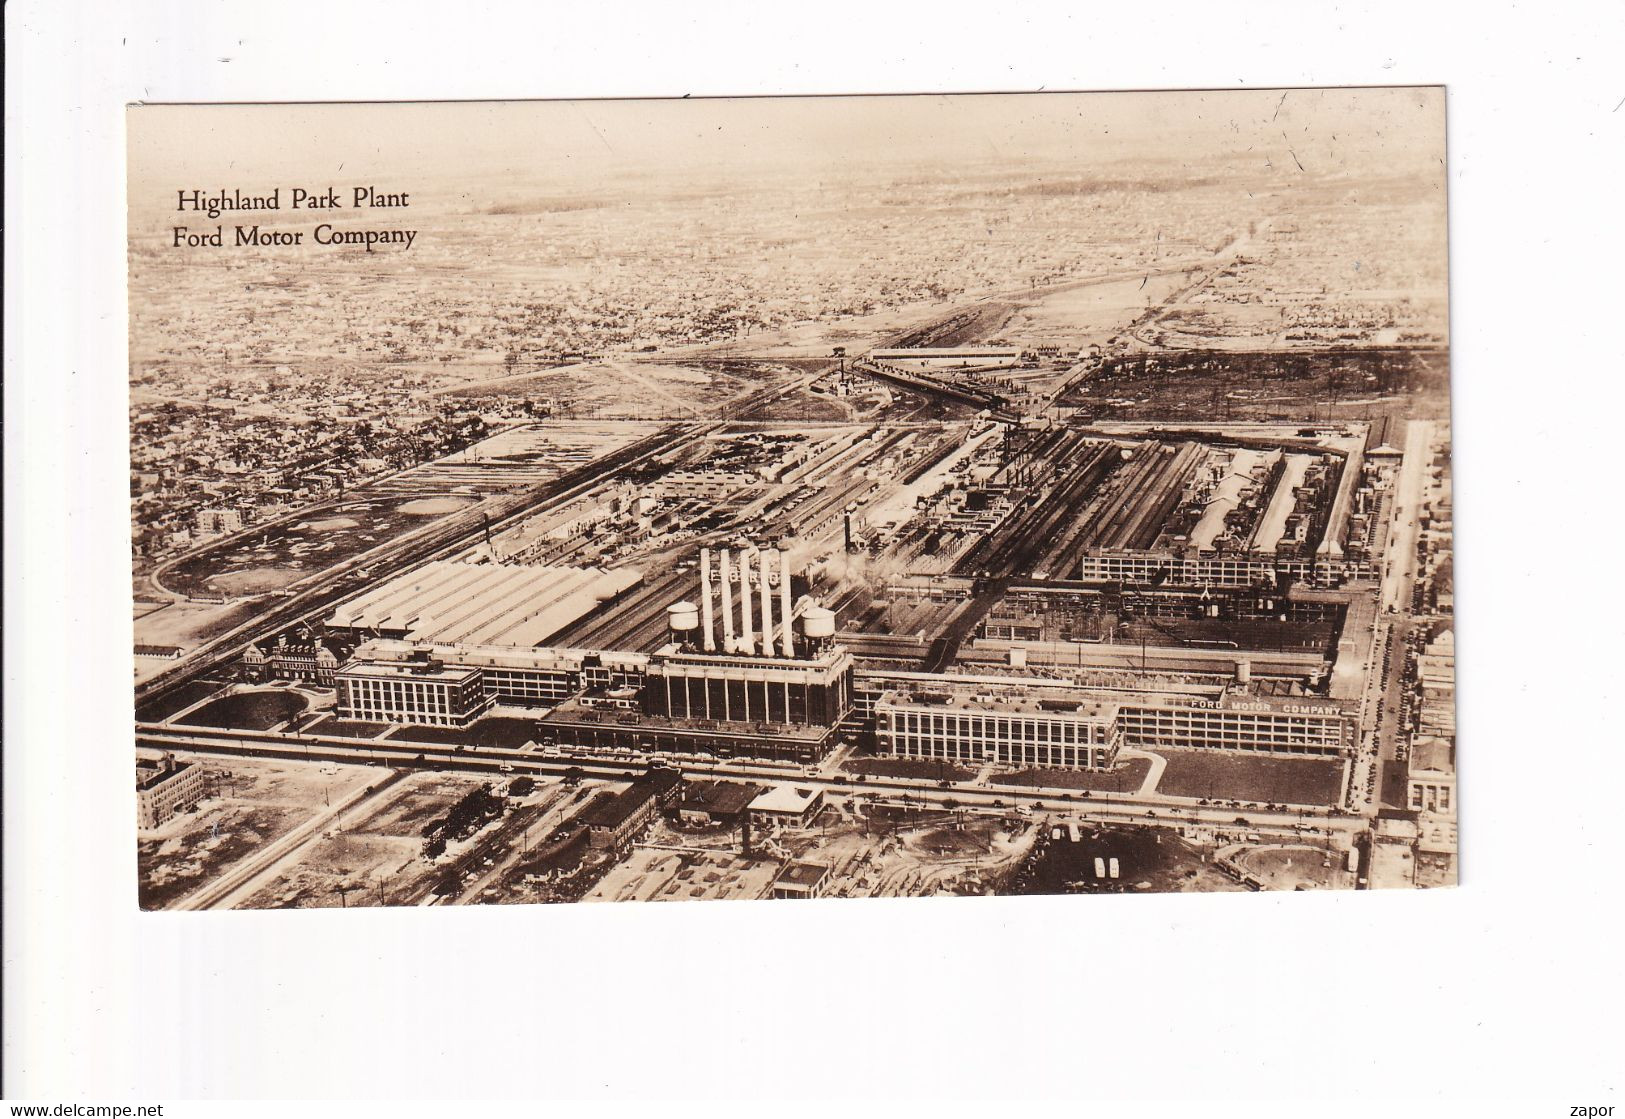 Highland Park Plant - Ford Motor Company - Dearborn